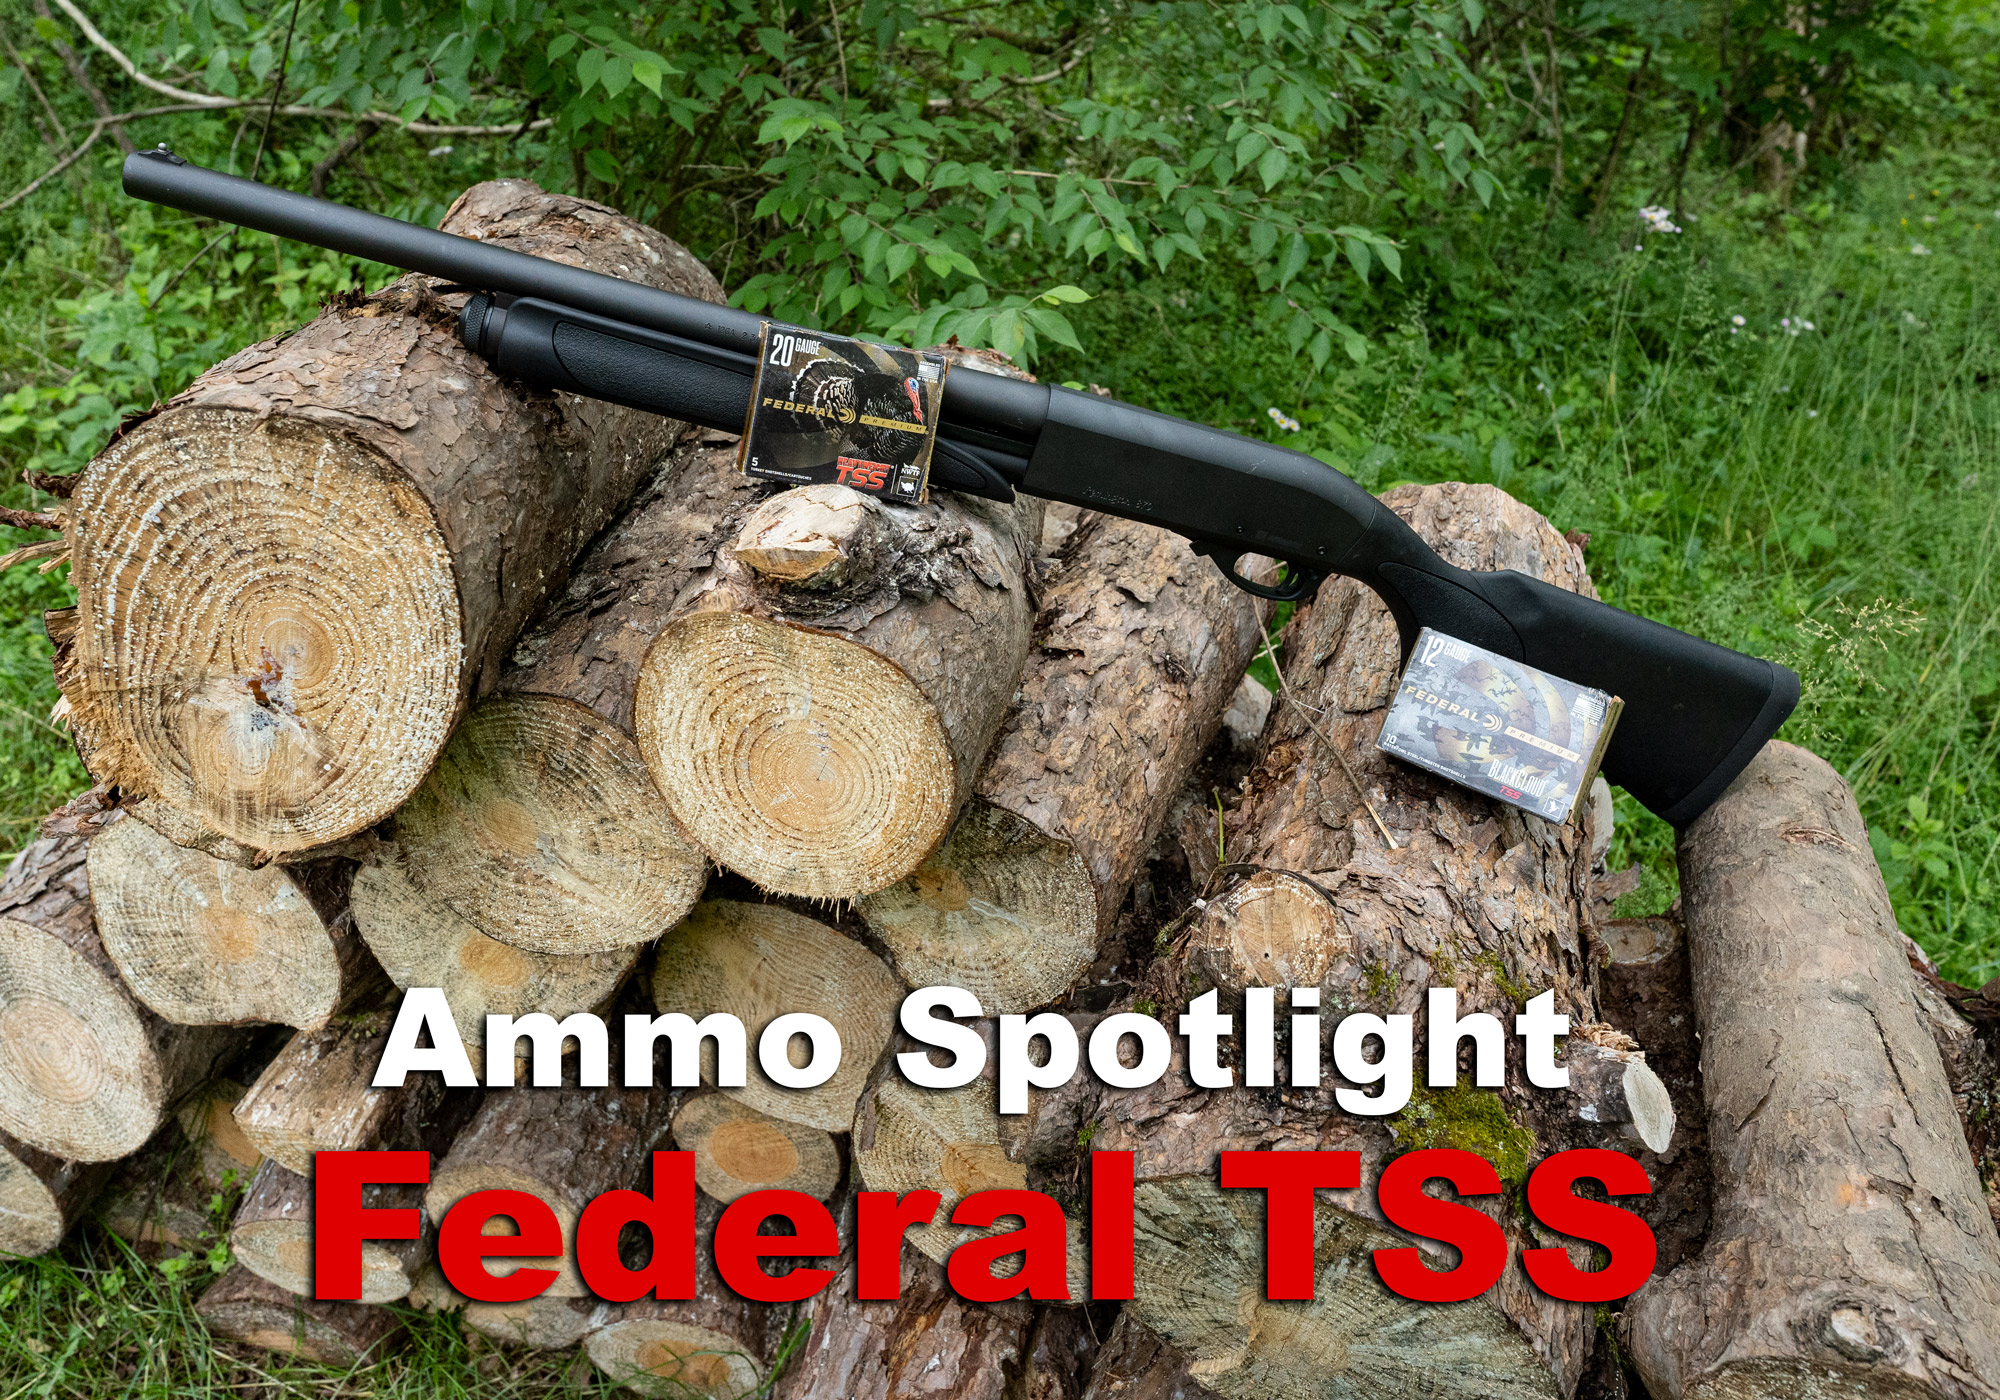 Federal TSS ammo and shotgun